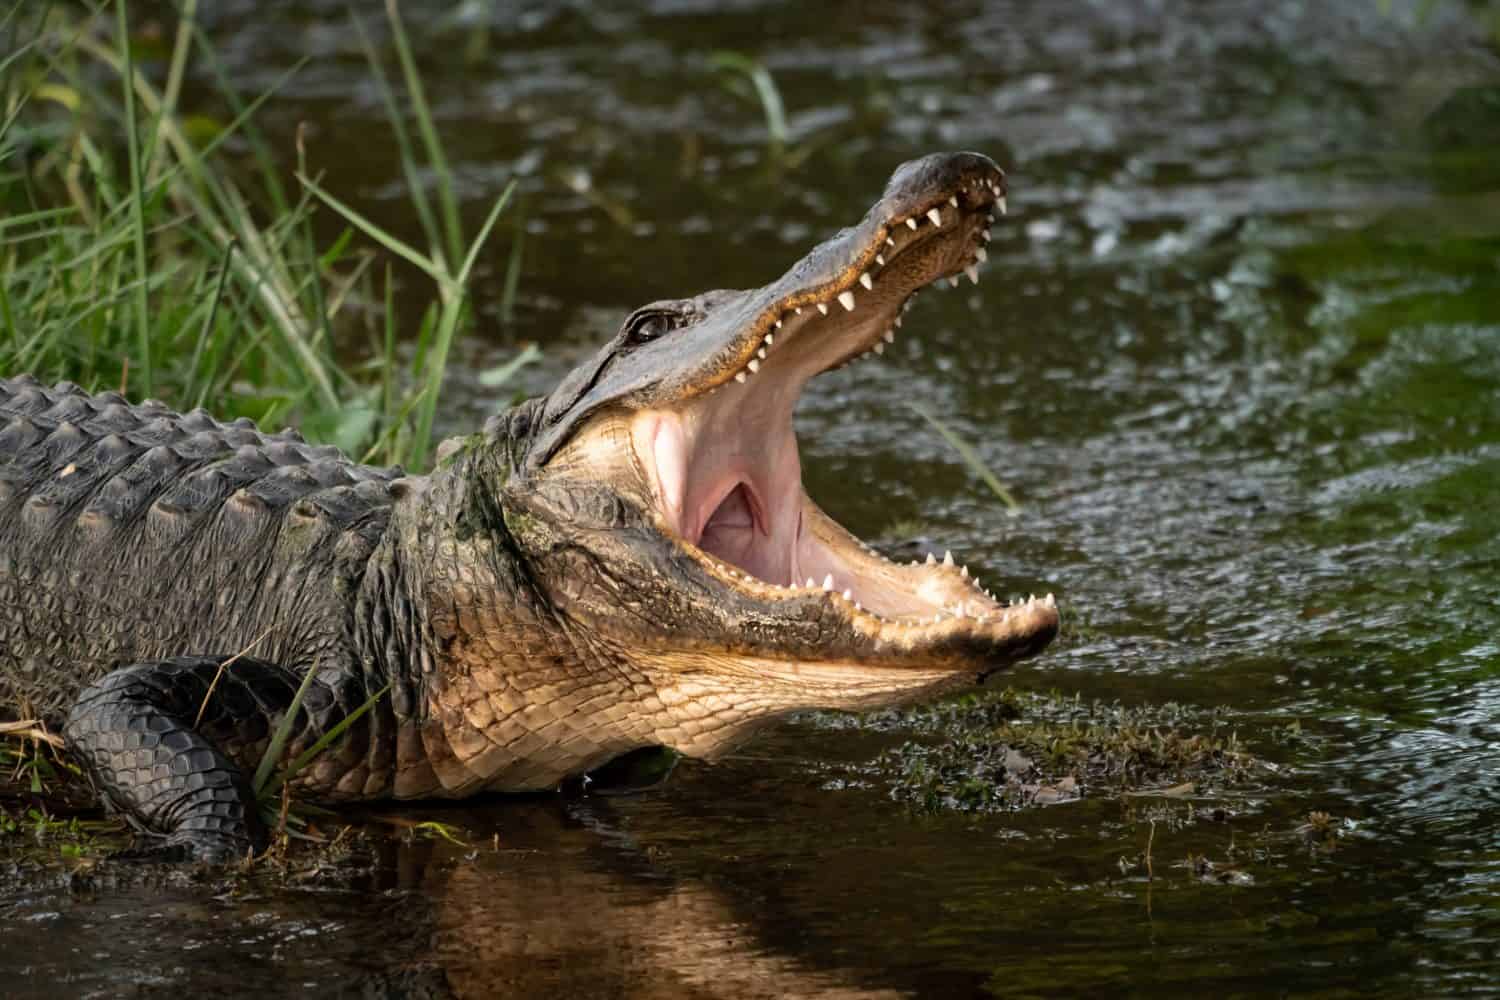 Wild American Alligator natural behavior at Orlando Wetlands at Cape Canaveral Florida.